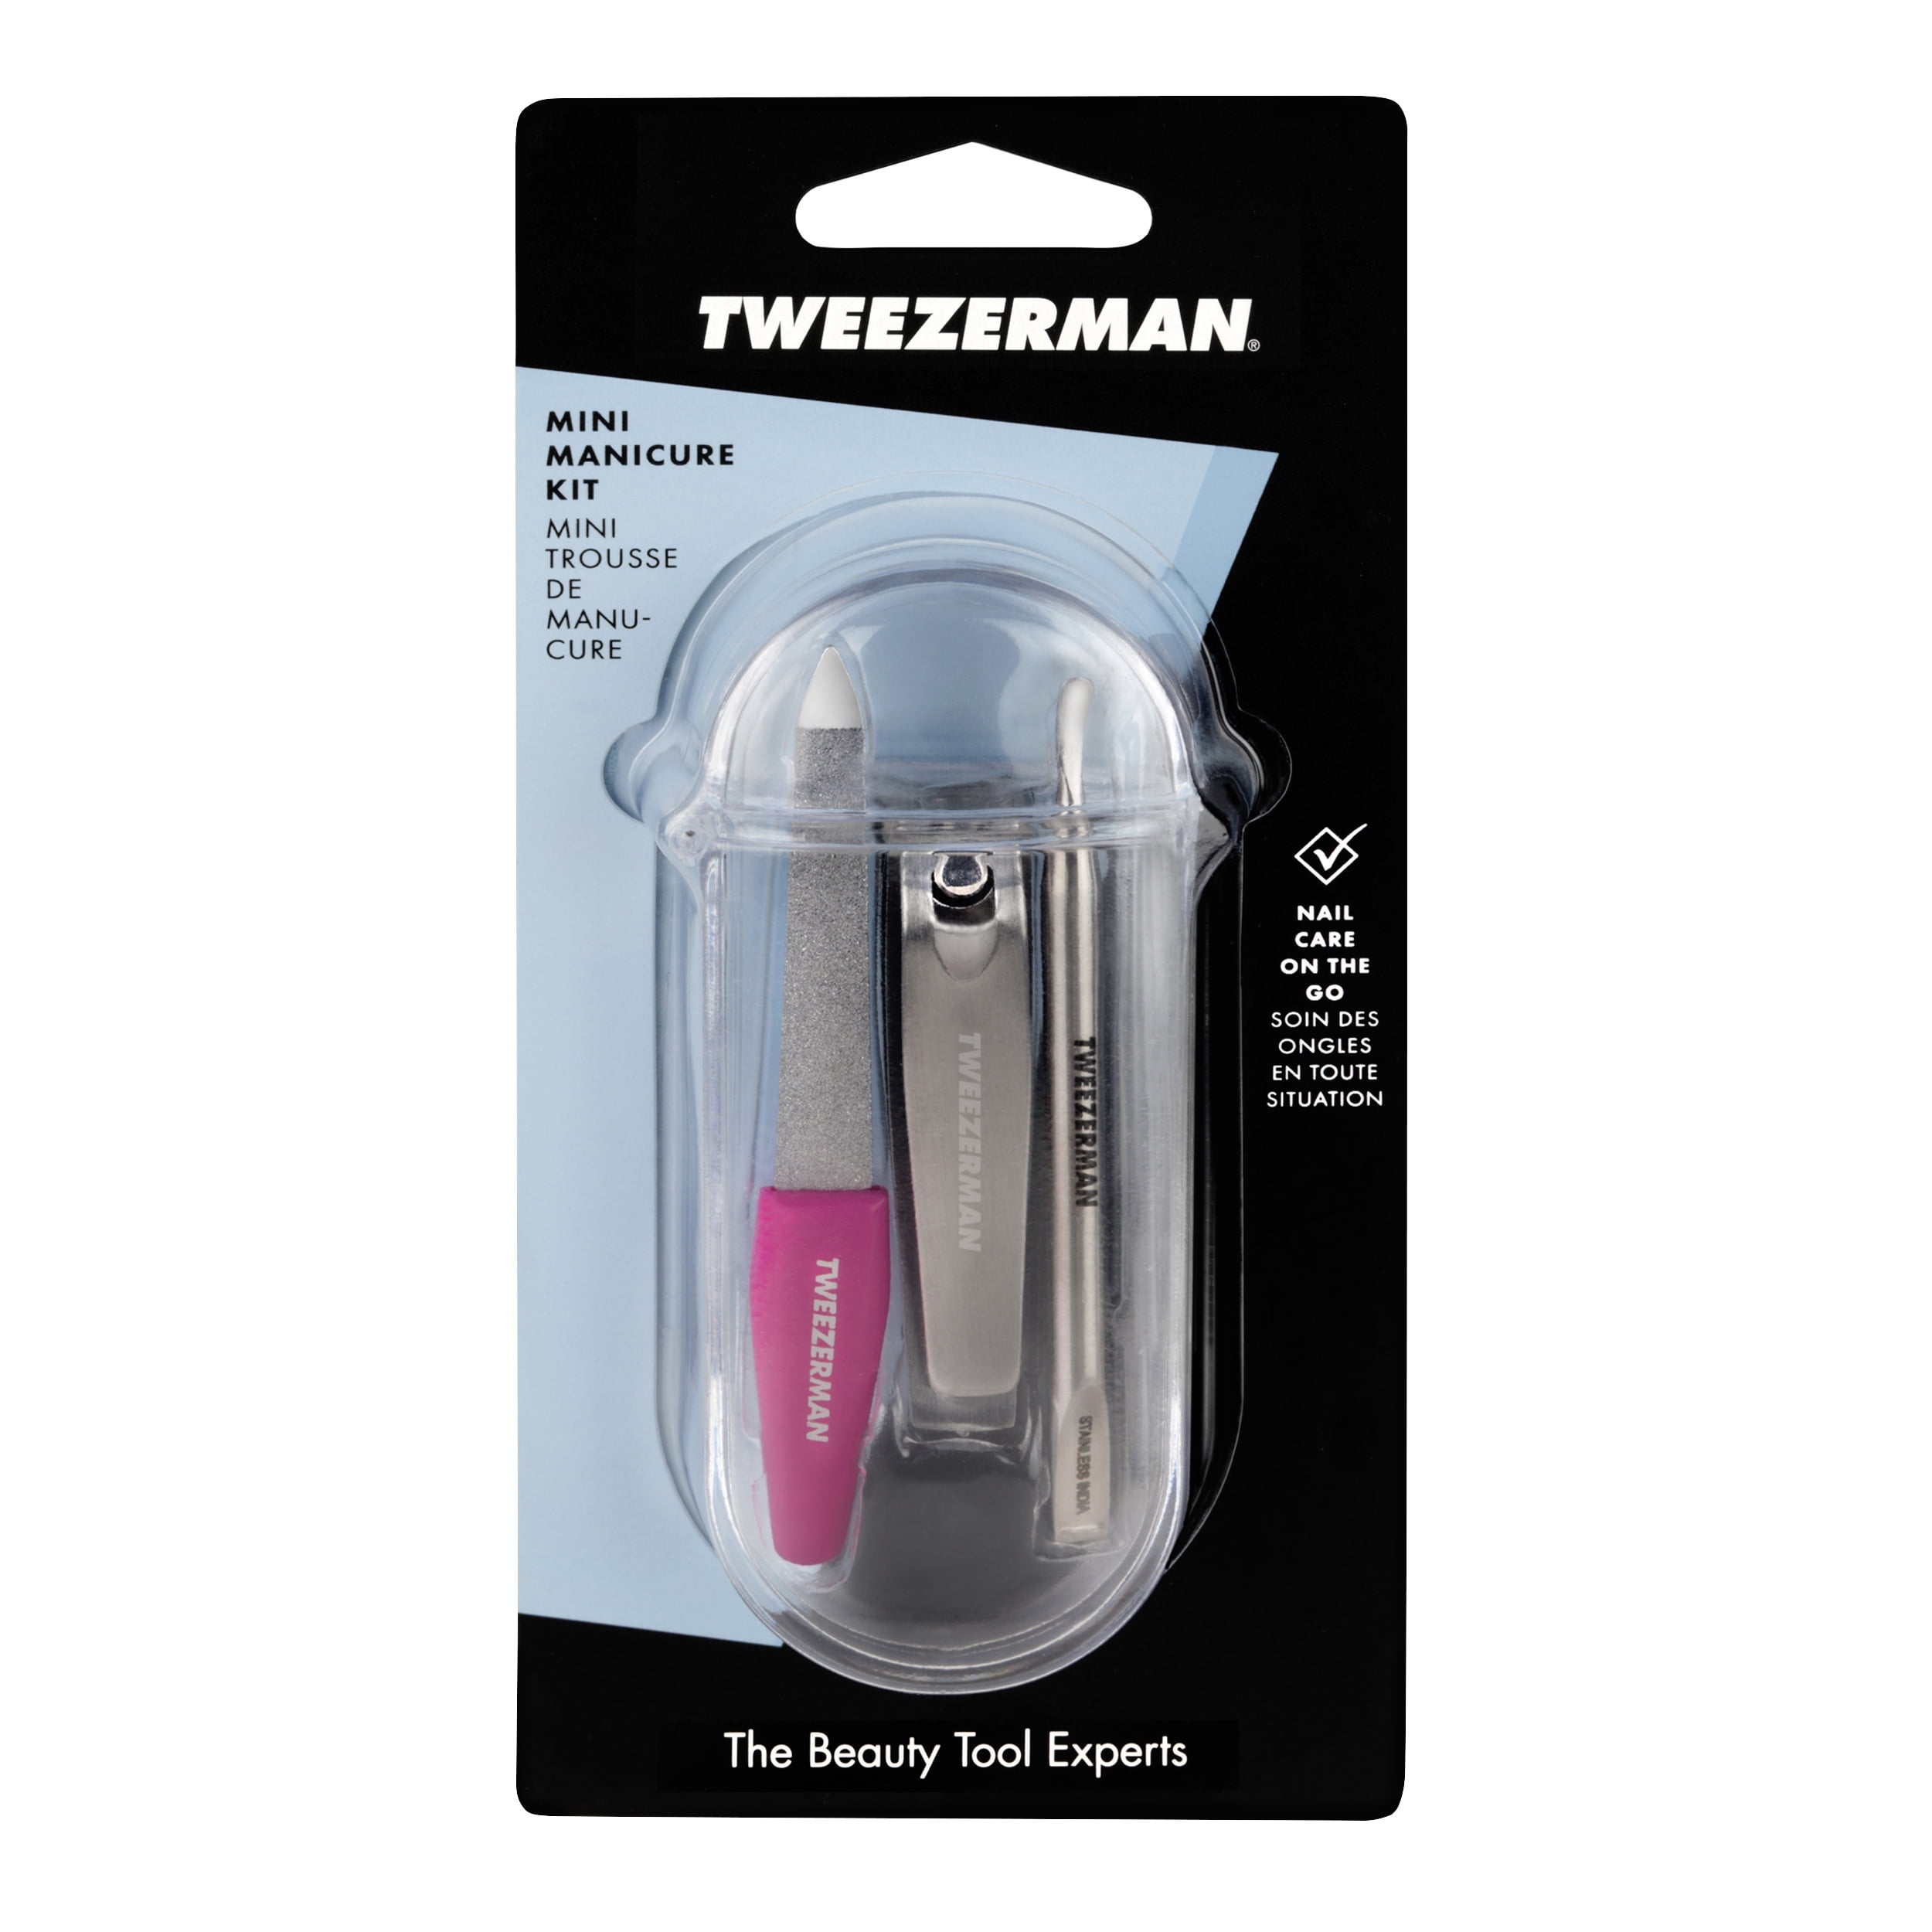 Tweezerman Mini Kit a Nail Pushy Clipper, & Nail with File Manicure Nail